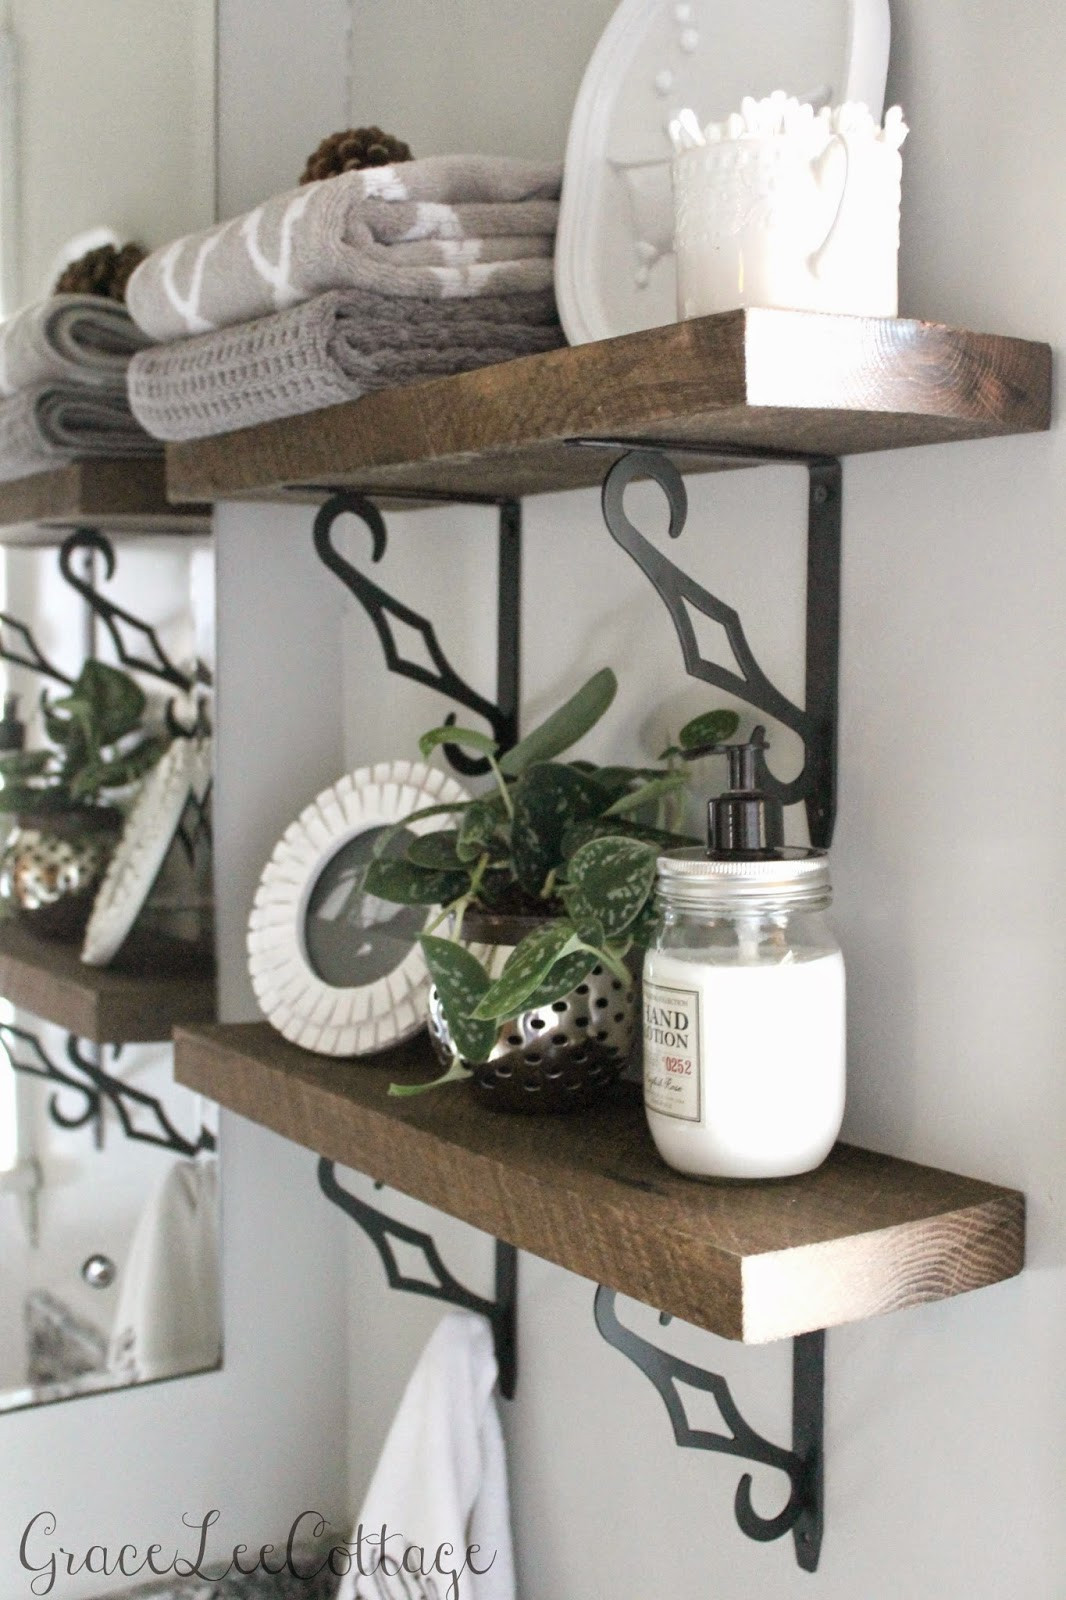 Best ideas about DIY Rustic Shelves
. Save or Pin Grace Lee Cottage DIY Rustic Bathroom Shelves Now.